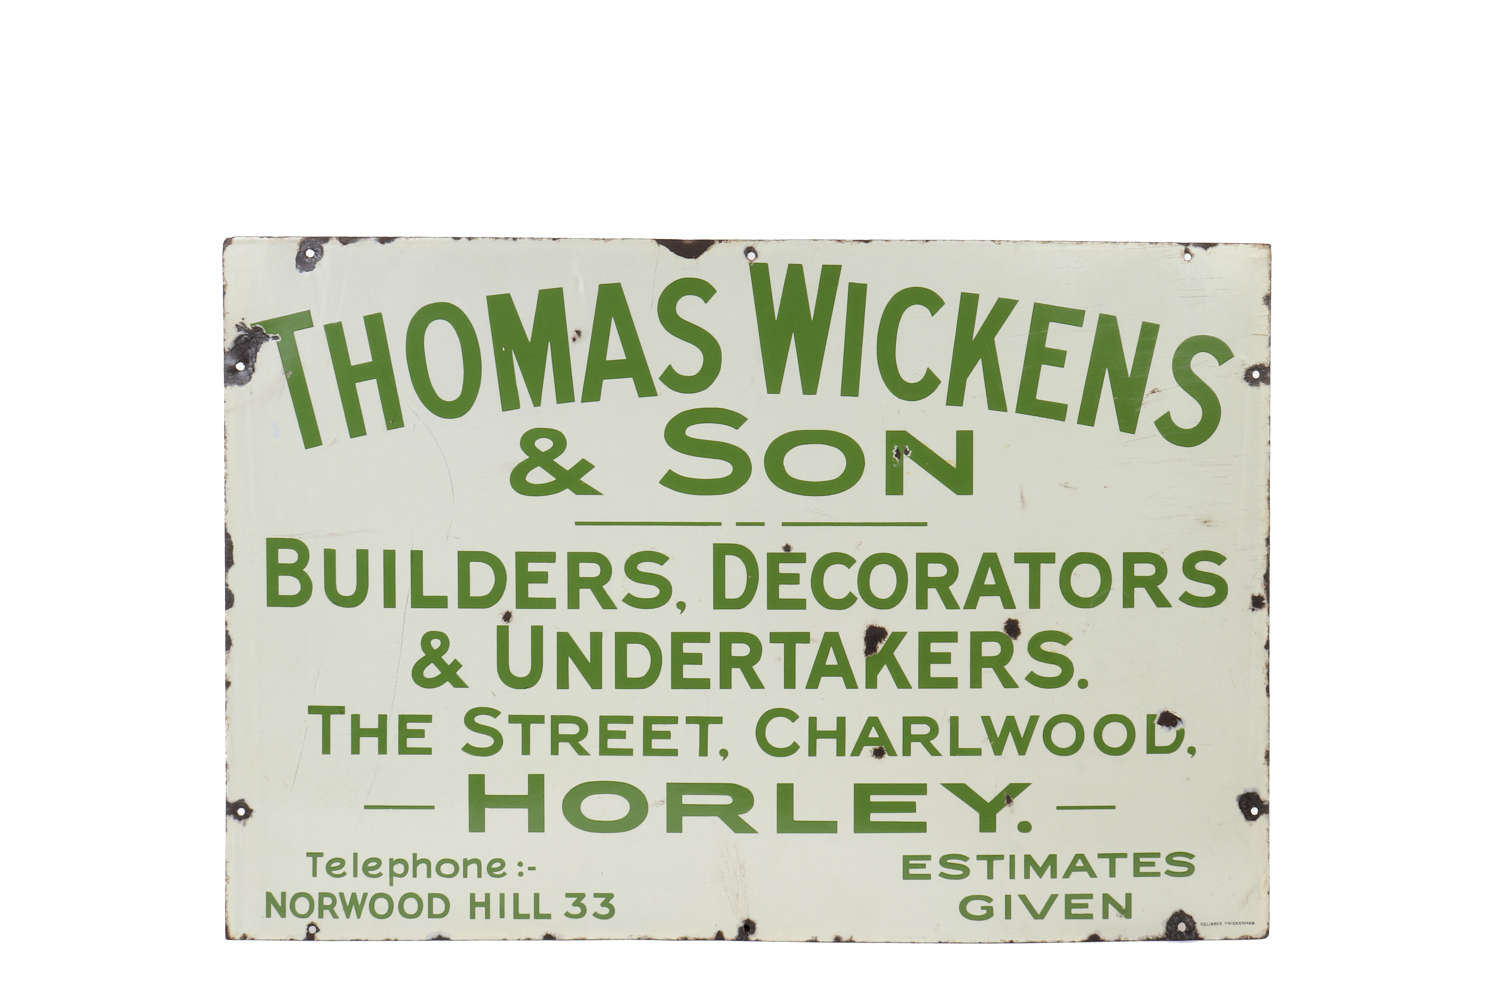 Thomas Wickens & Son - Builders, Decorators & Undertakers.